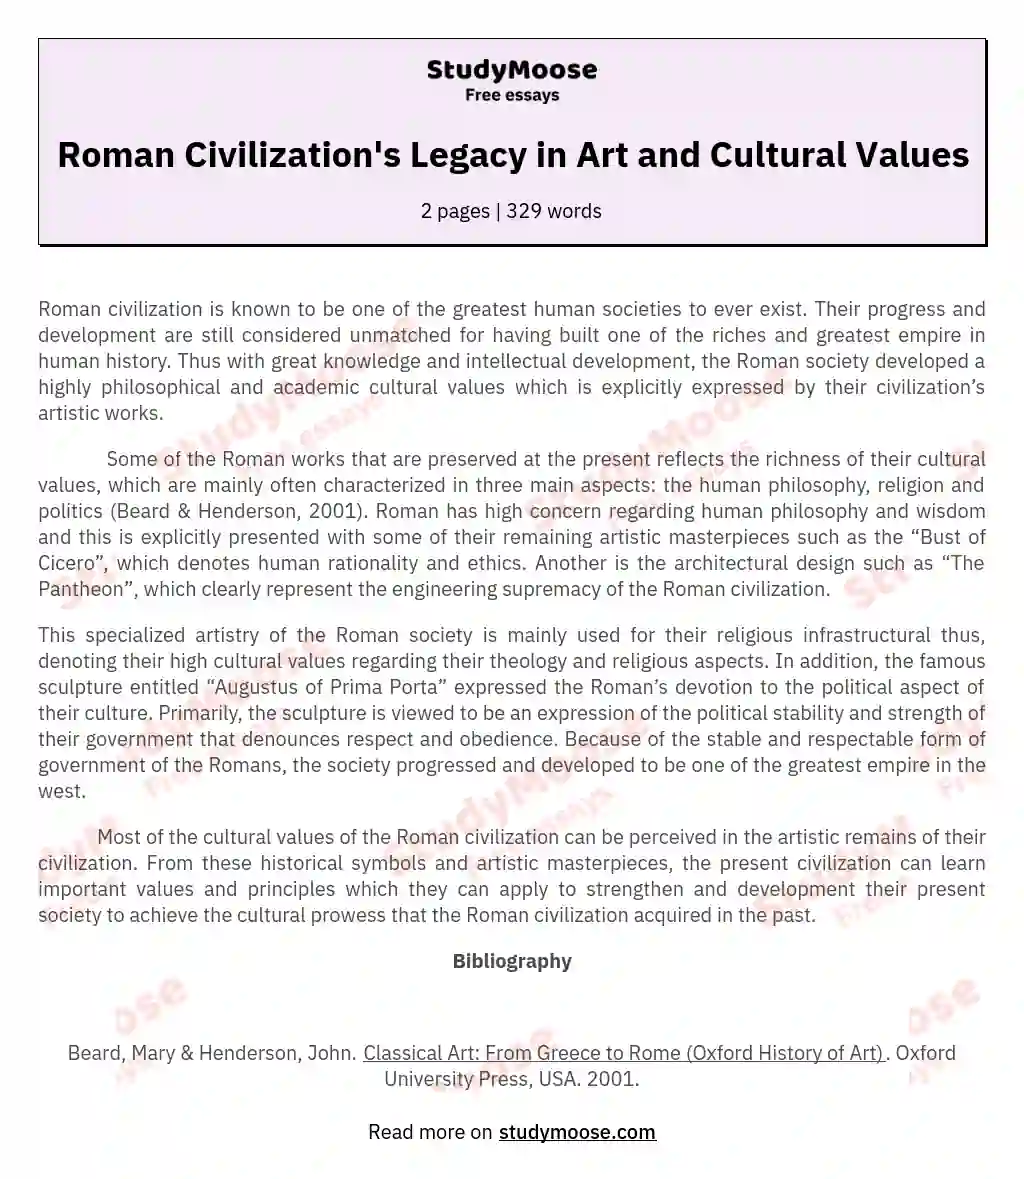 Roman Civilization's Legacy in Art and Cultural Values essay